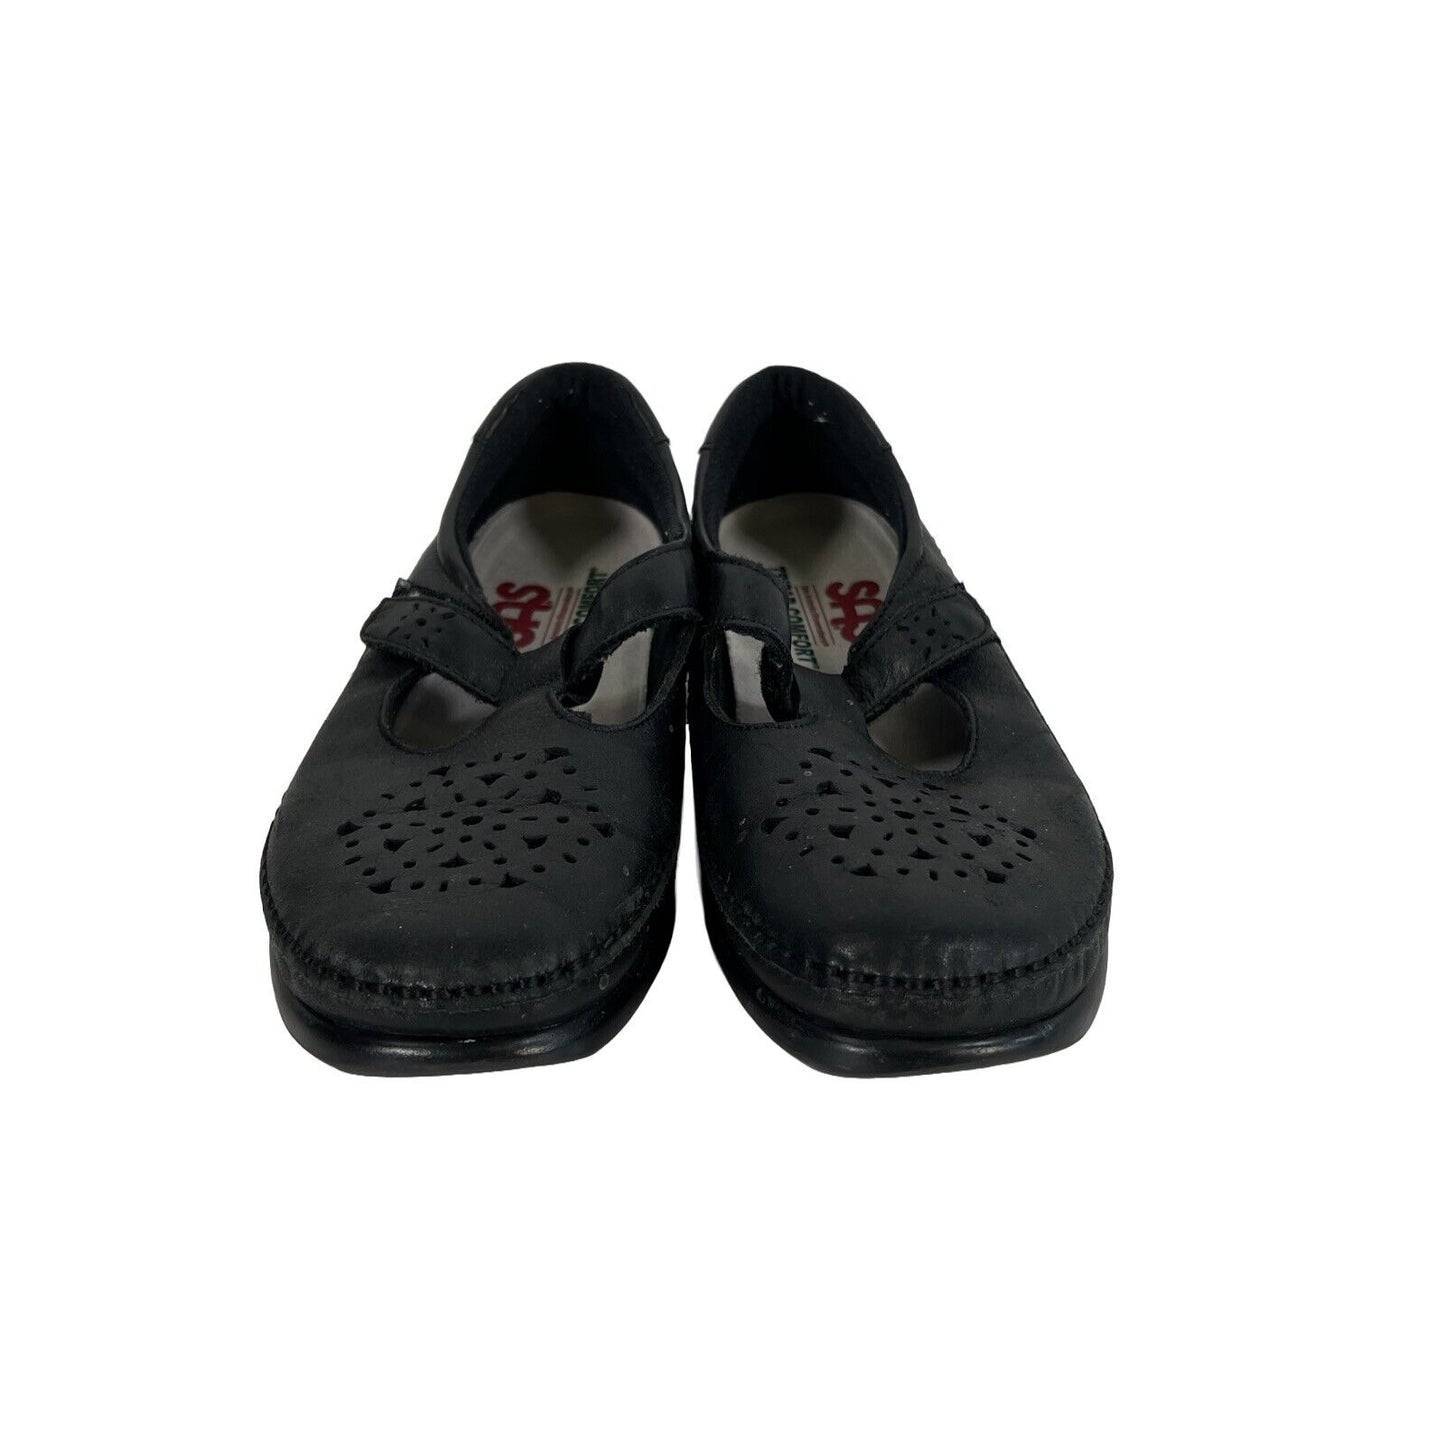 SAS Women's Black Leather Tripad Comfort Shoes - 6.5